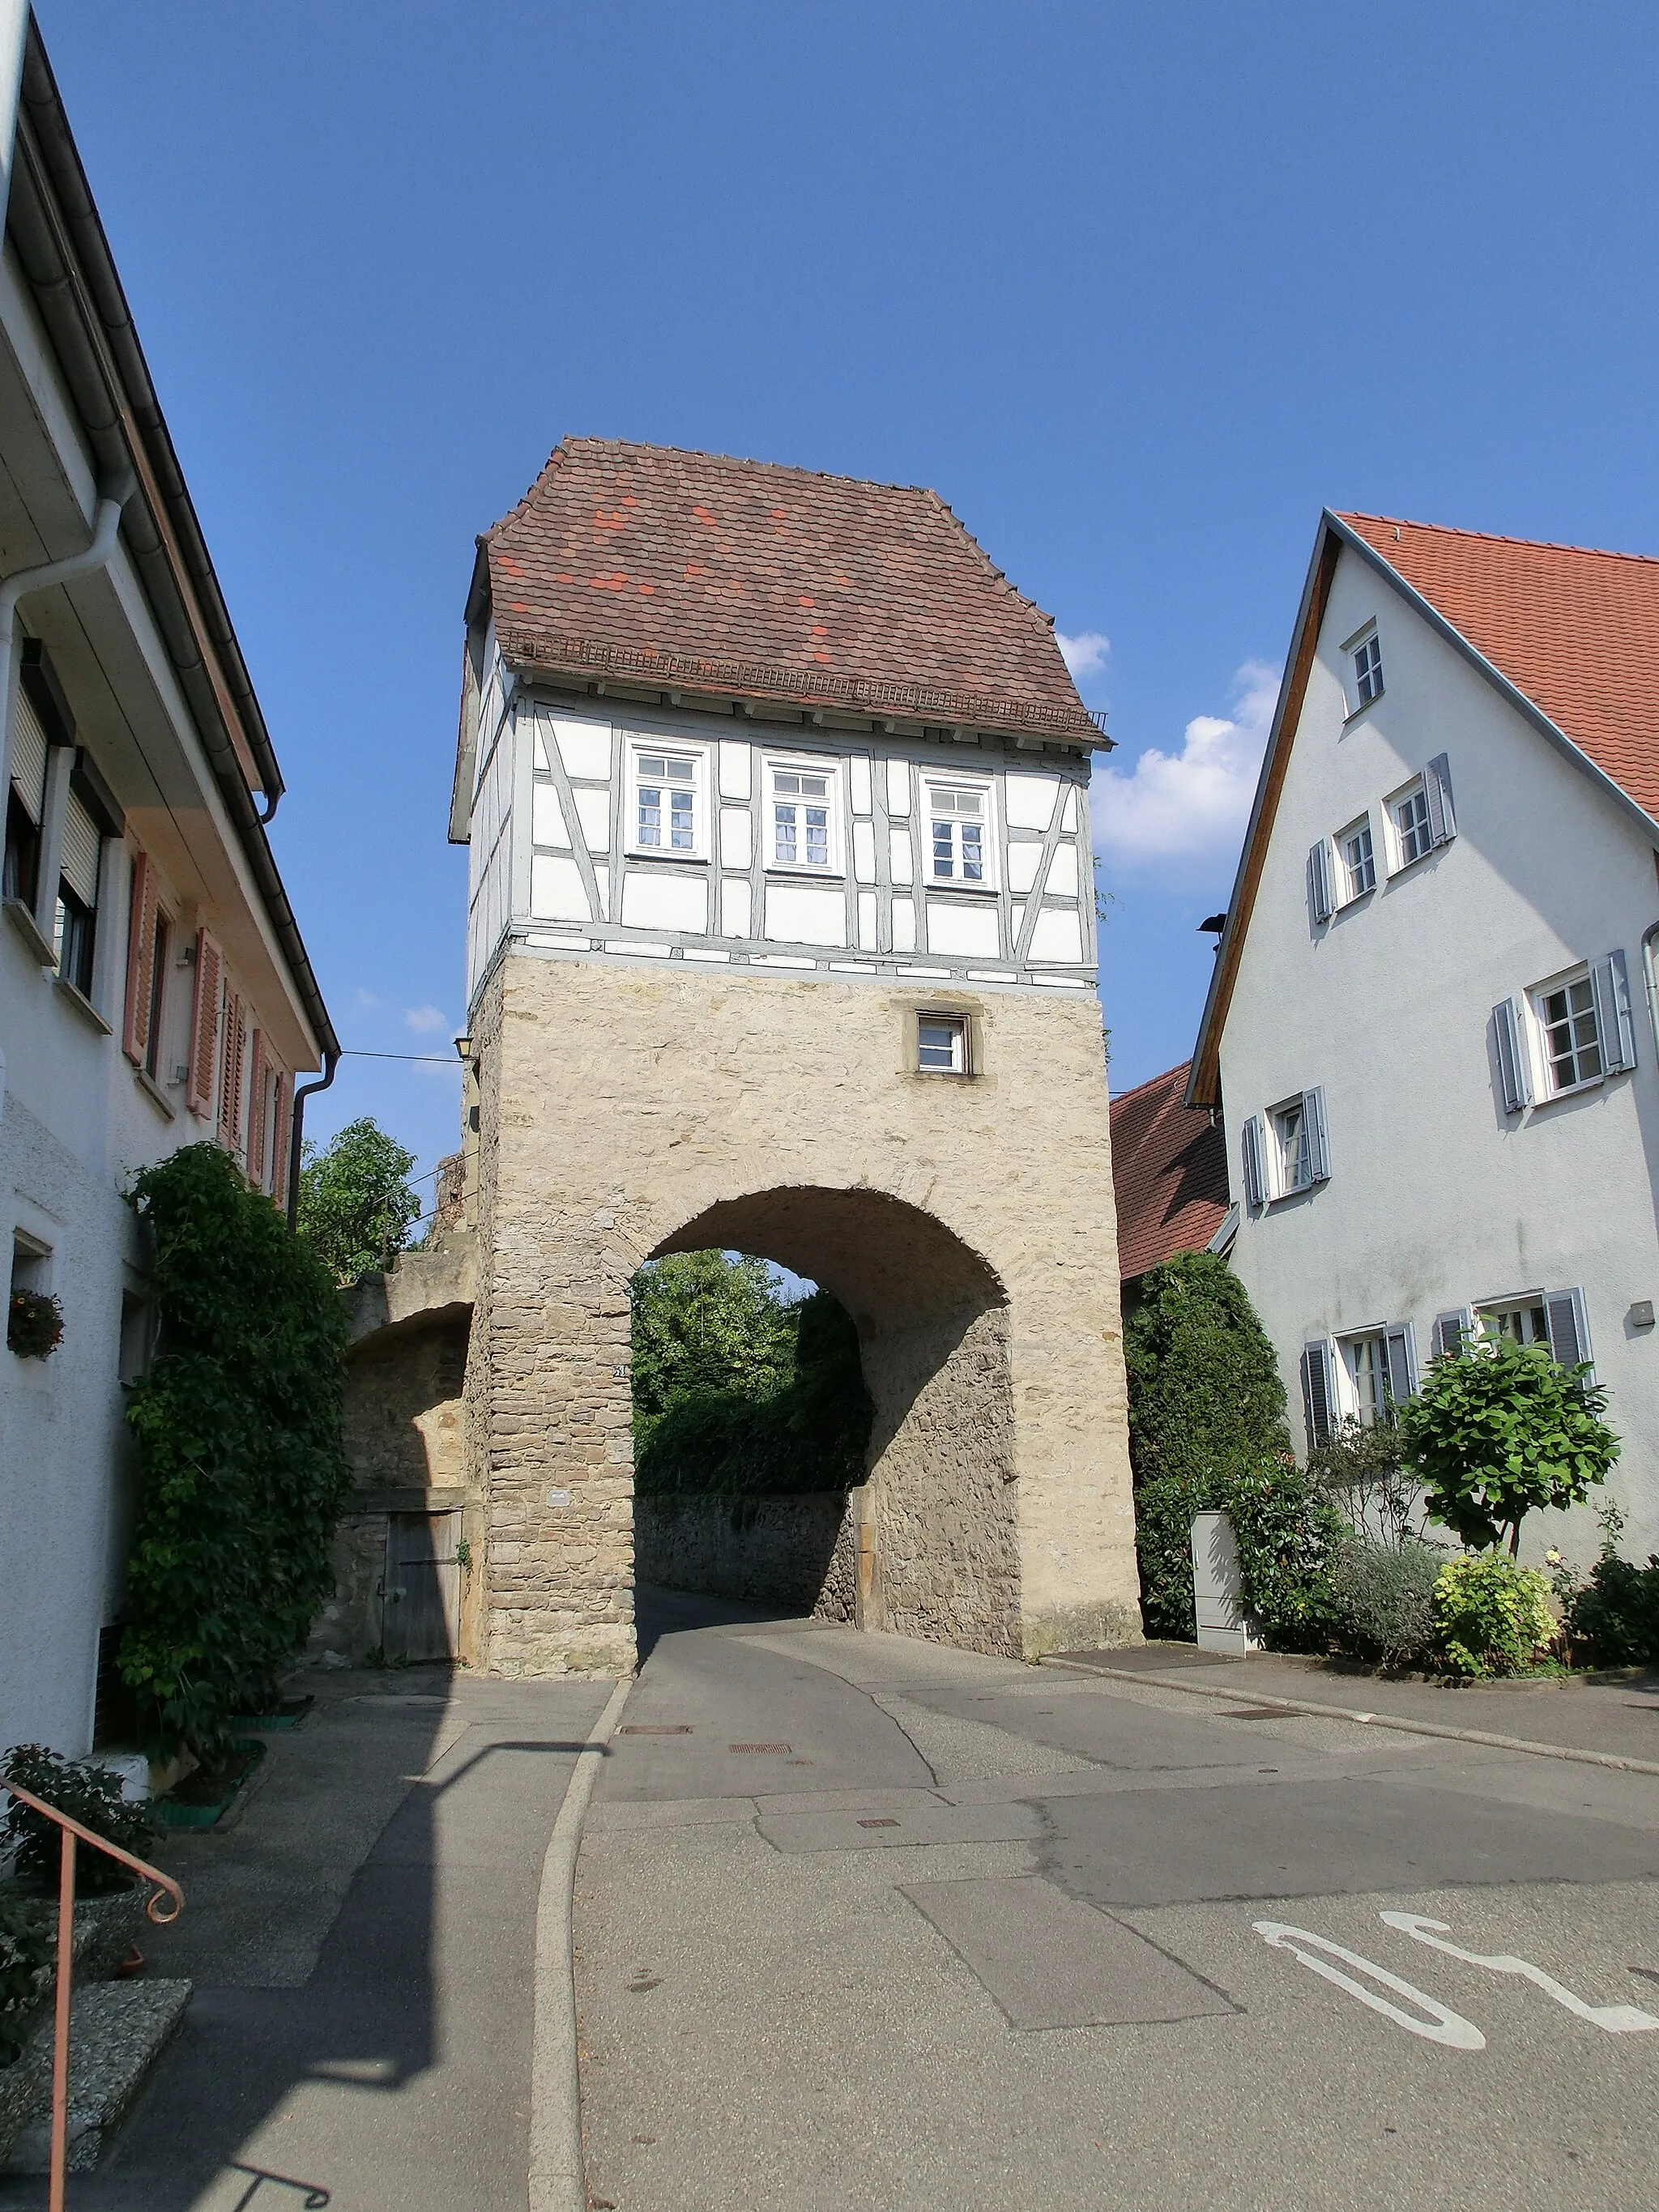 Photo showing: The Neckartor (translation: "Neckar gate") in Kirchheim am Neckar, Baden-Württemberg.